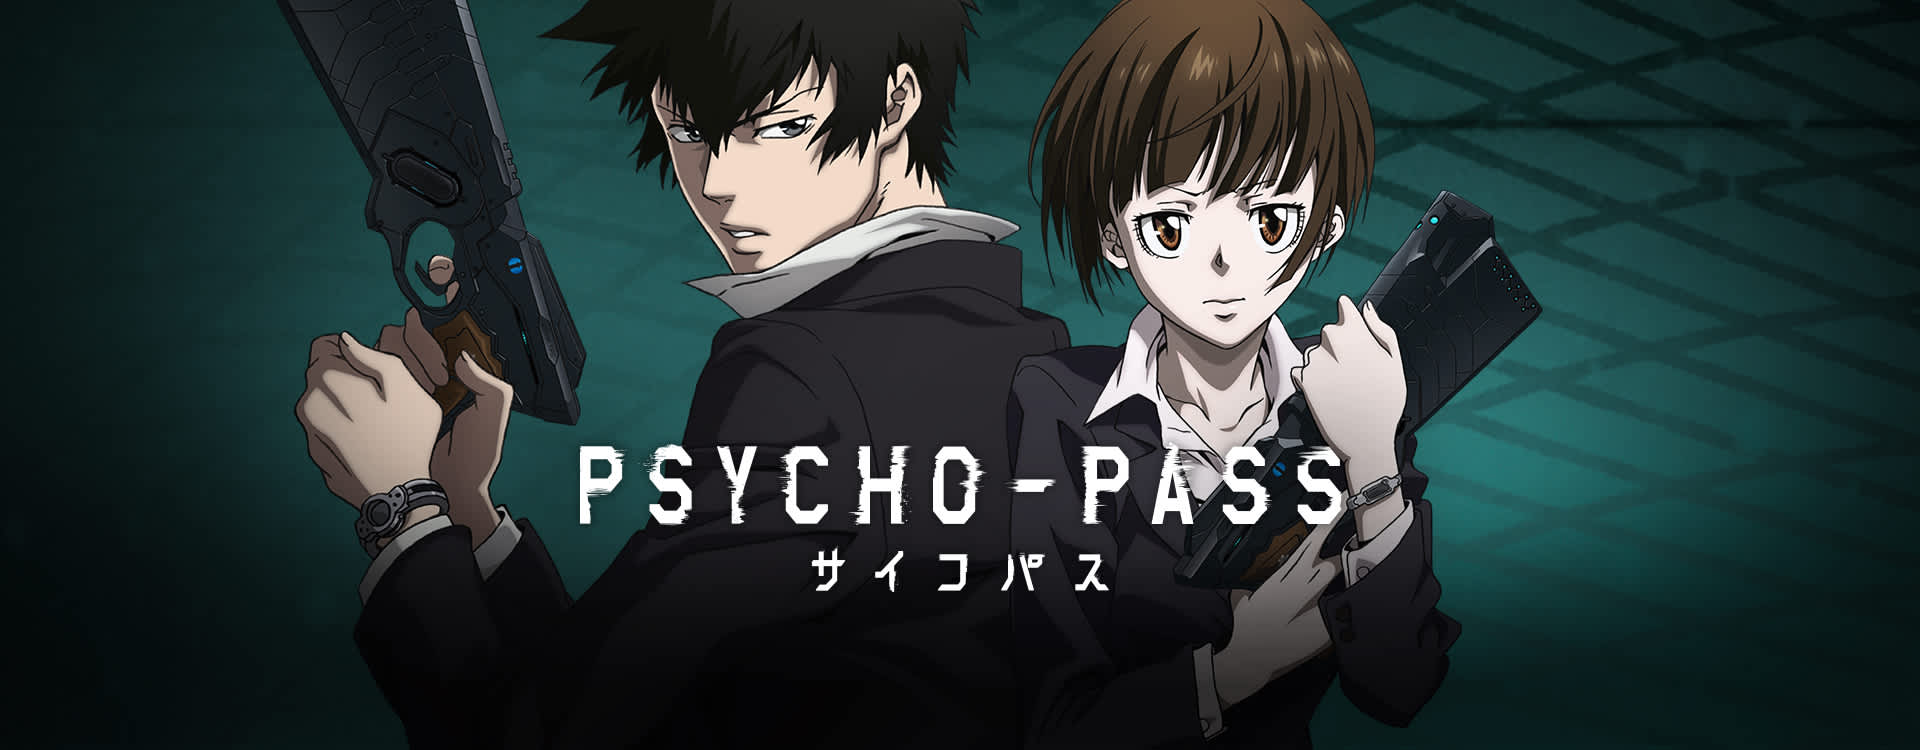 Psychopath Anime Boy Wallpaper